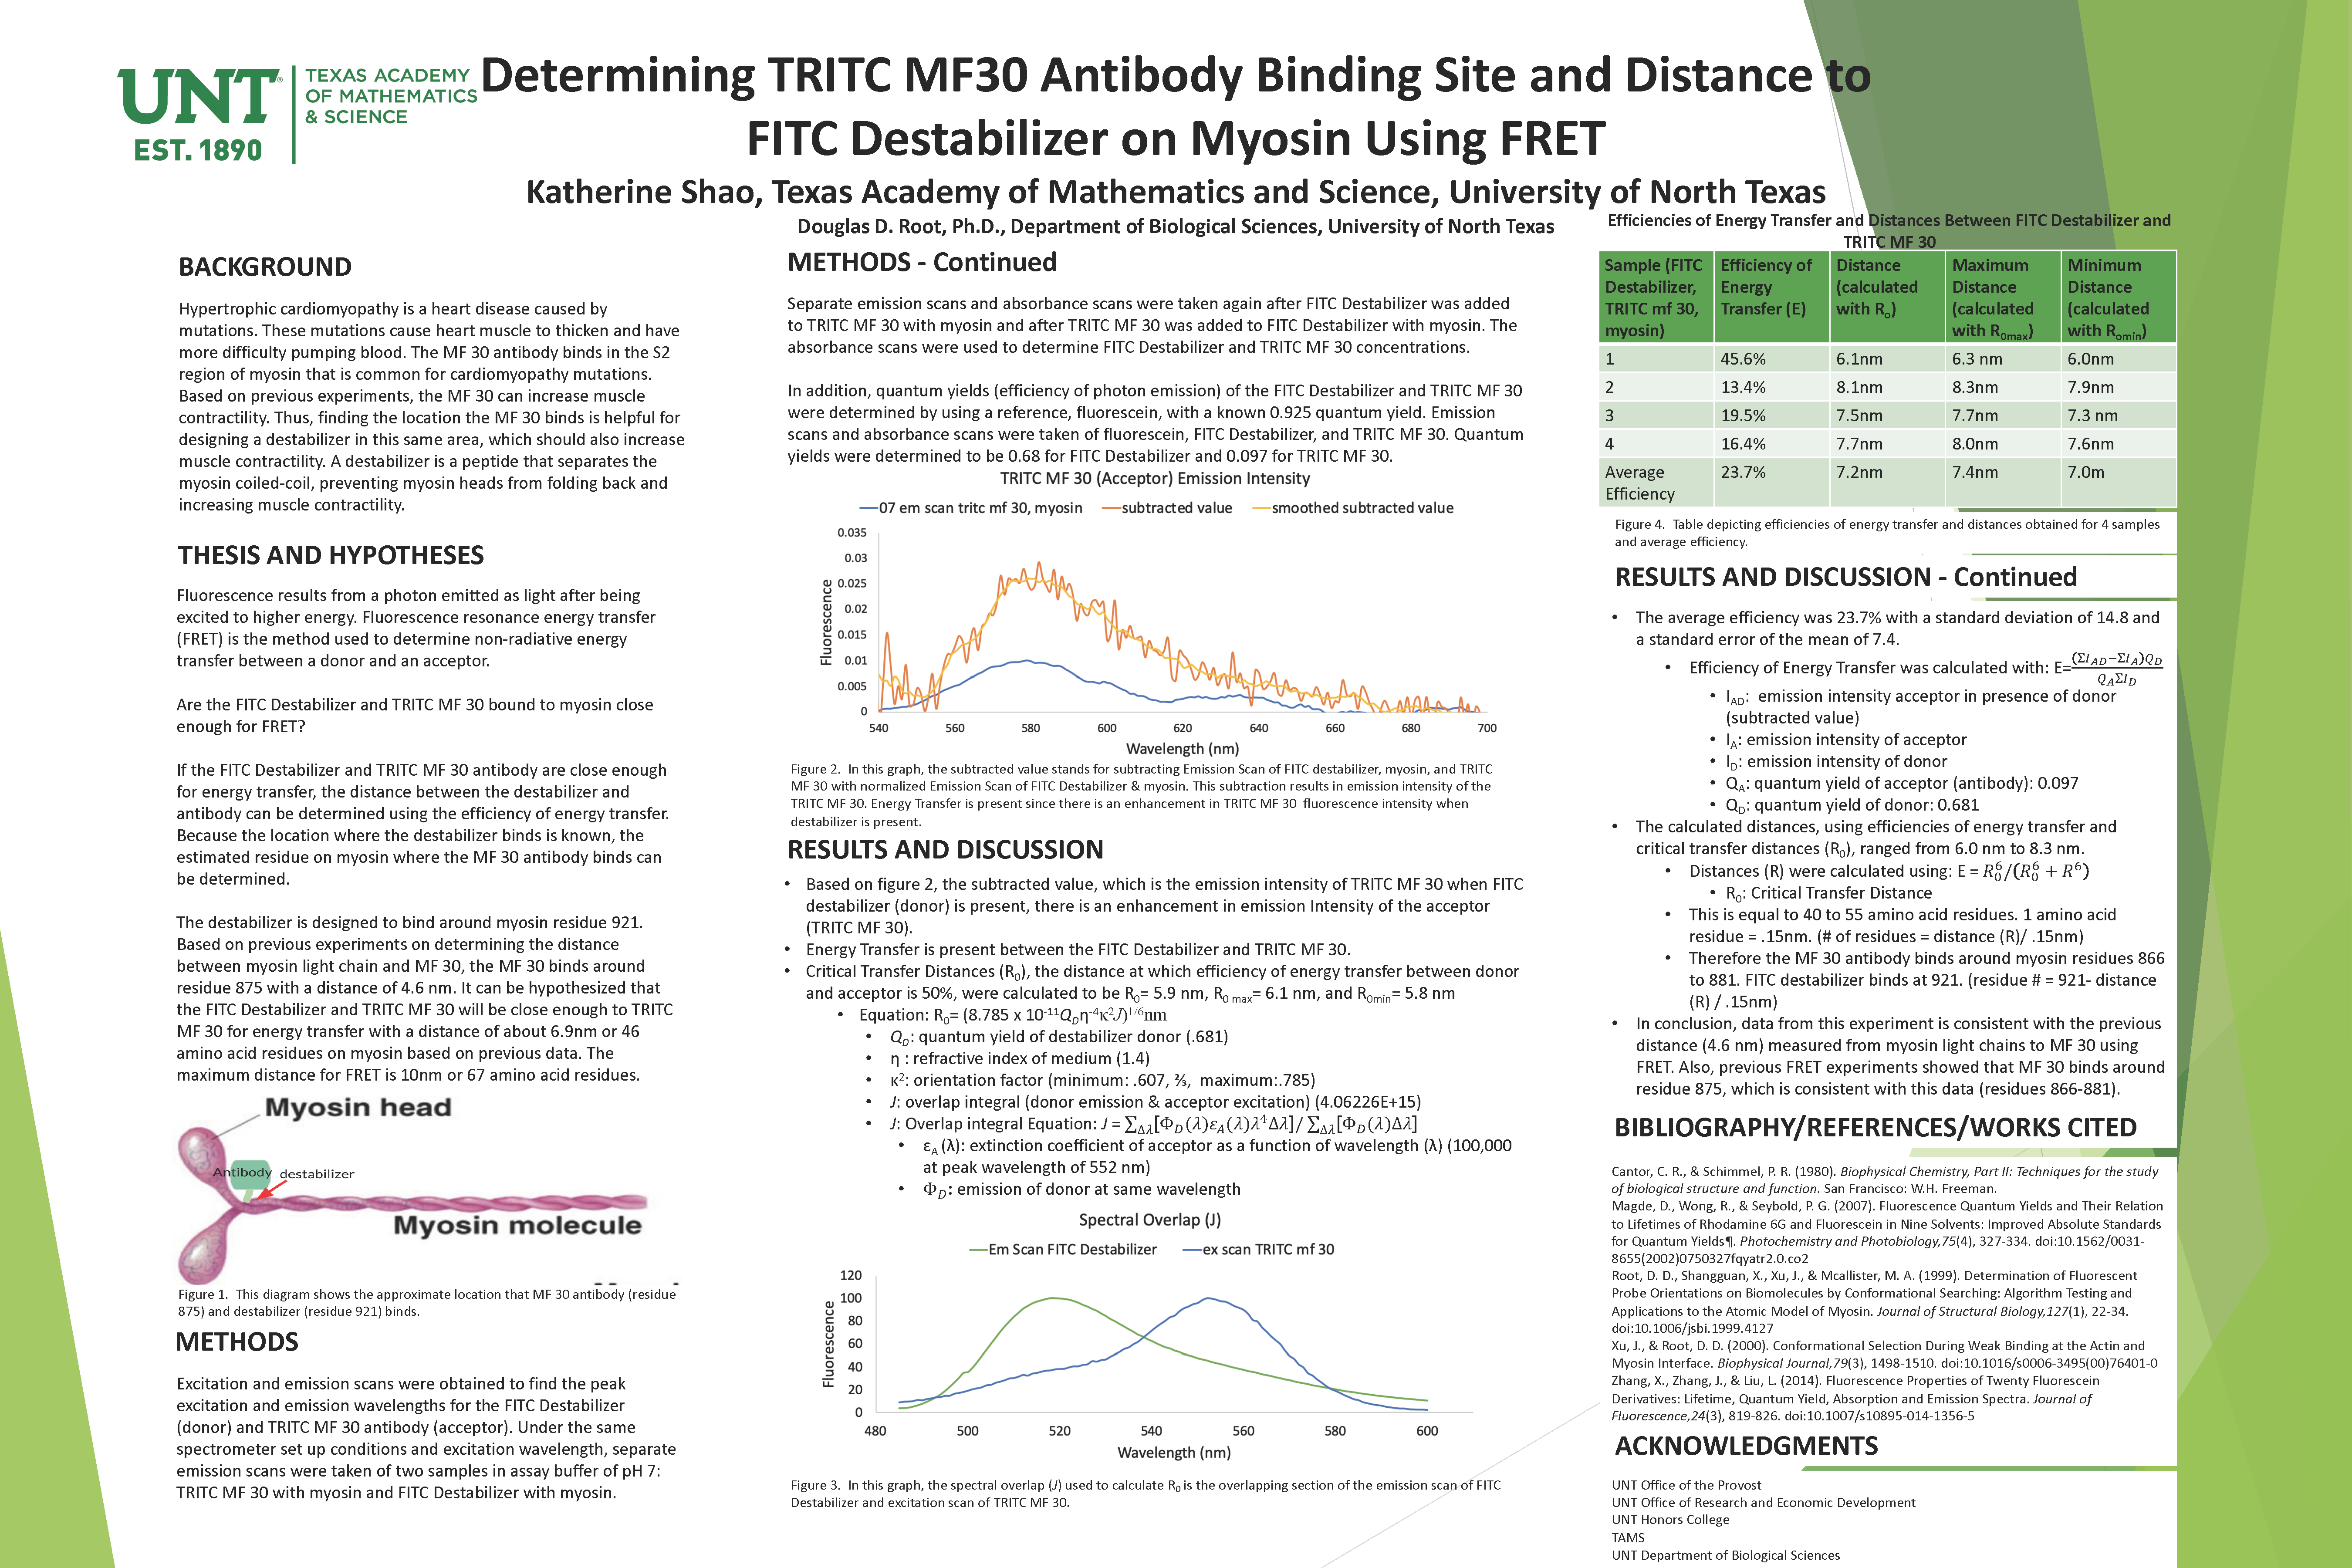 Determining TRITC MF30 Antibody Binding Site and Distance to FITC Destabilizer on Myosin Using FRET